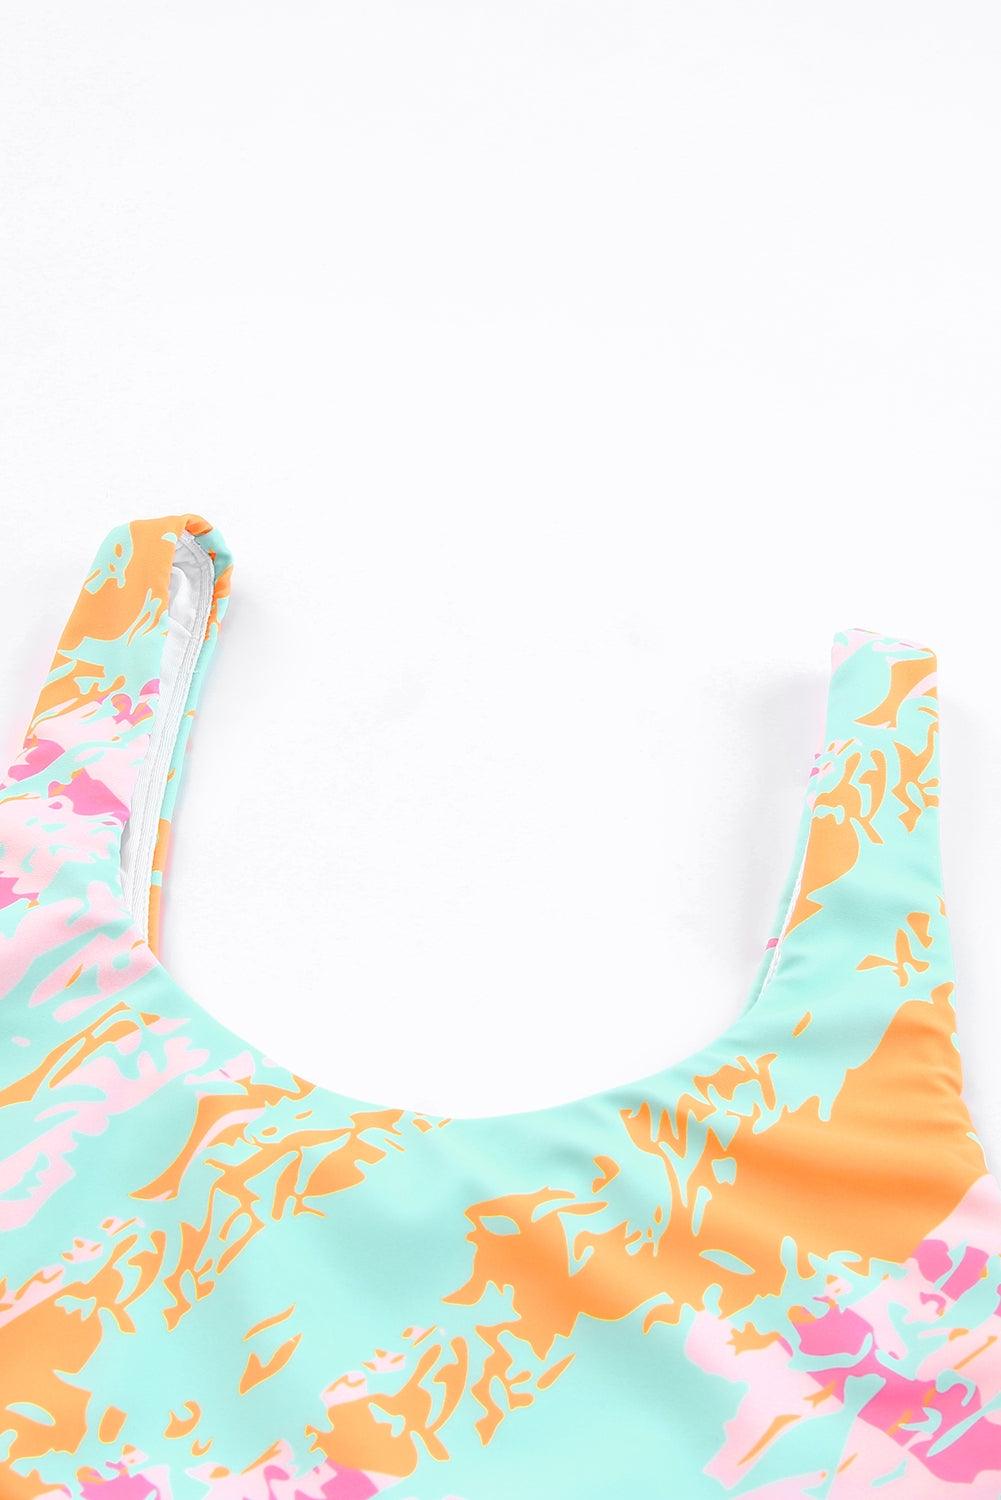 Abstract Waves Print High Waist Bikini Swimsuit - L & M Kee, LLC